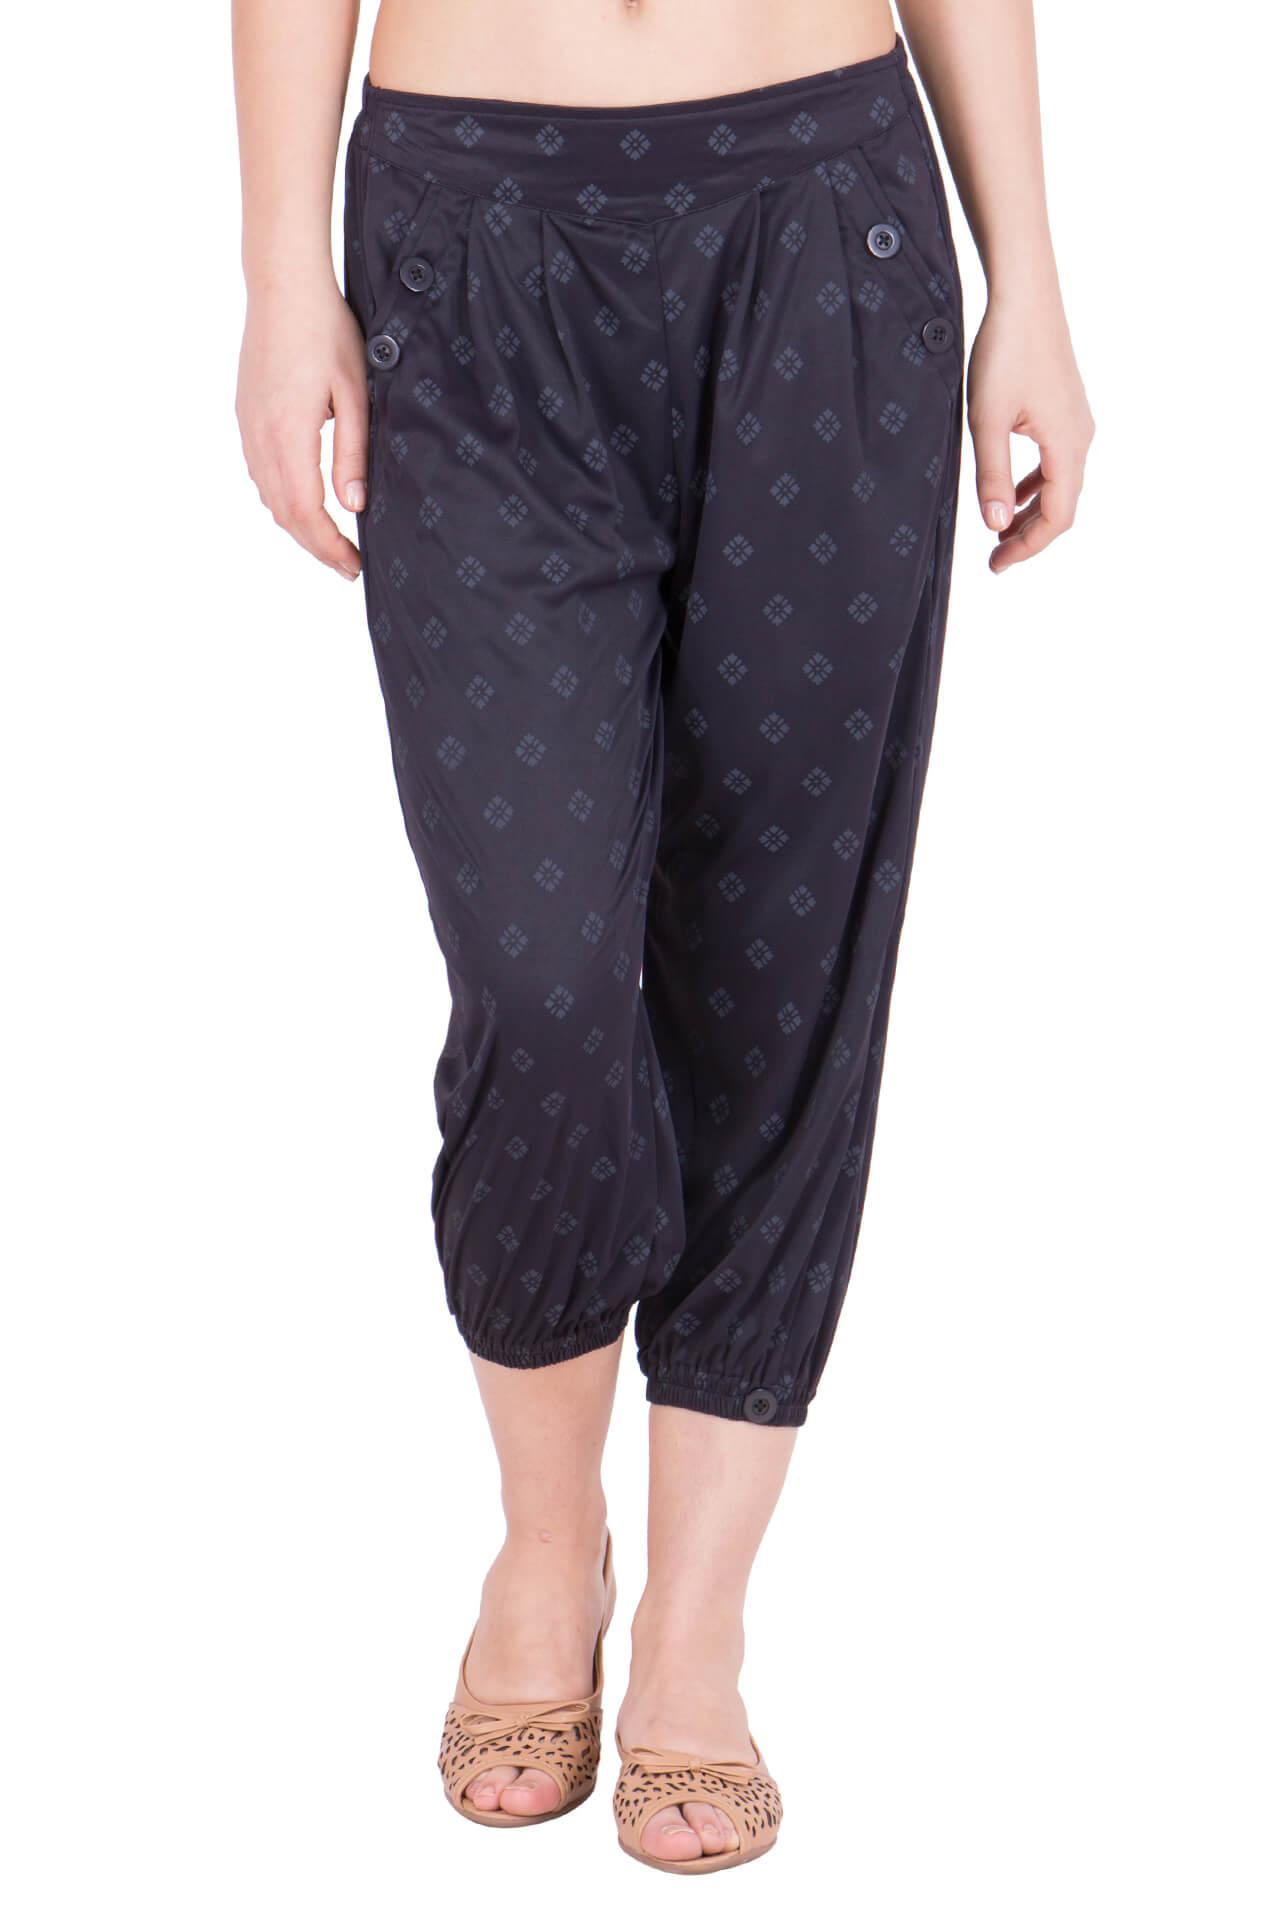 Black Capri Pants for Girls & Women – Zubix : Clothing, Accessories and  Home Furnishing Shop Online